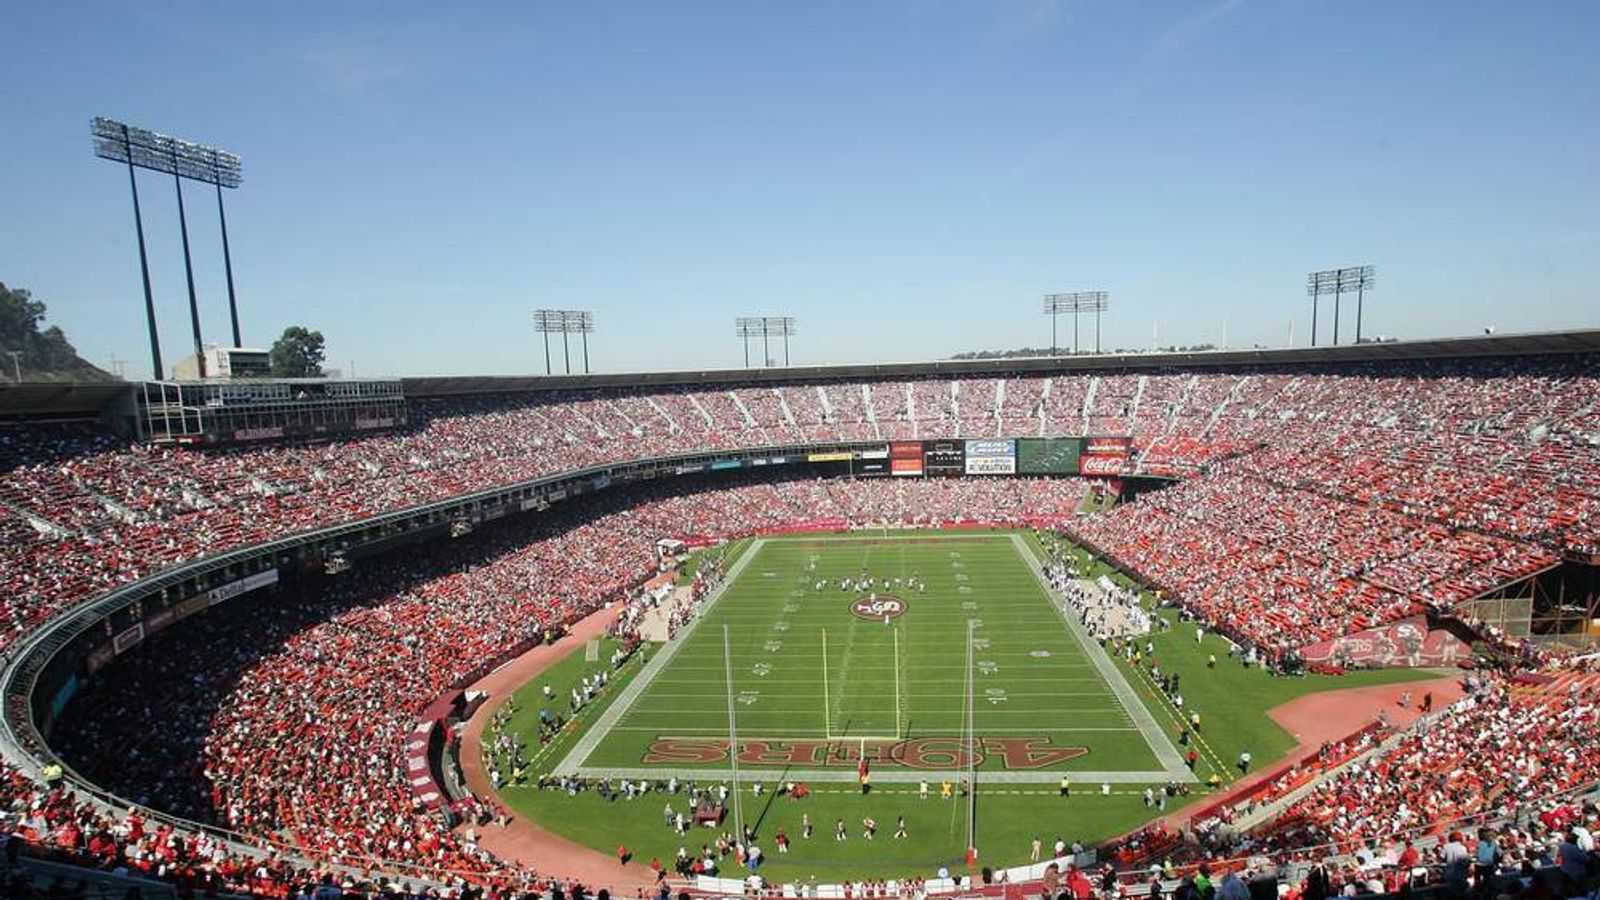 San Francisco 49ers: Man Dies In Fall At Game, US News